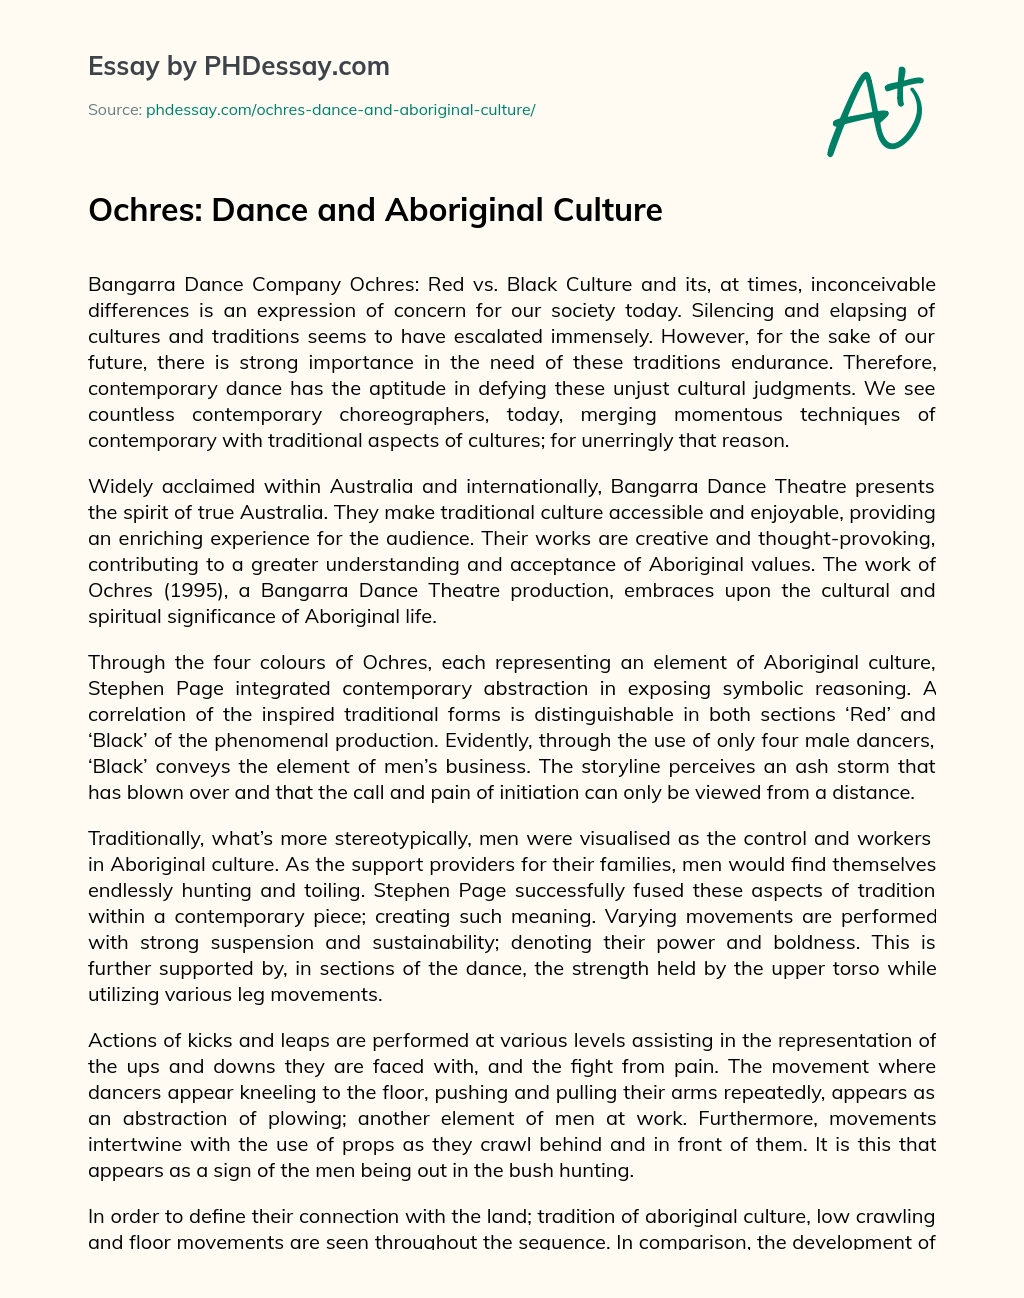 Ochres: Dance and Aboriginal Culture essay